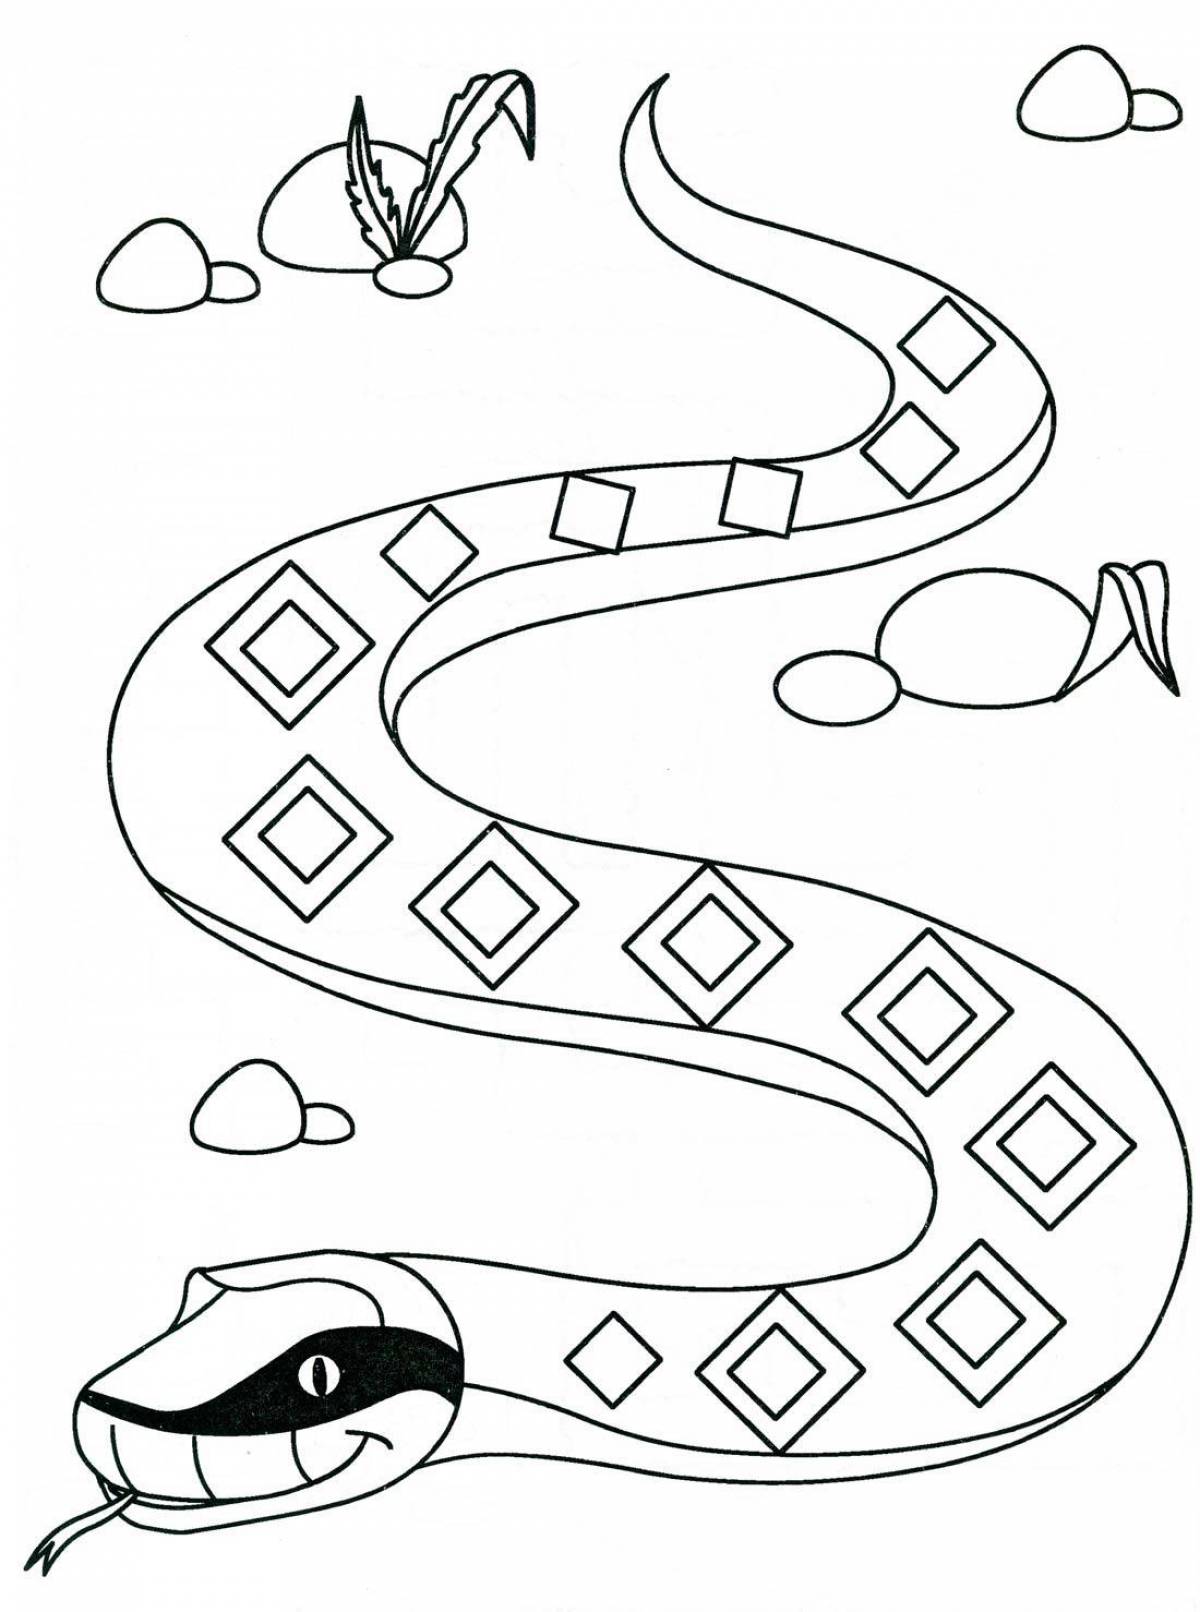 Раскраска змея (просто)